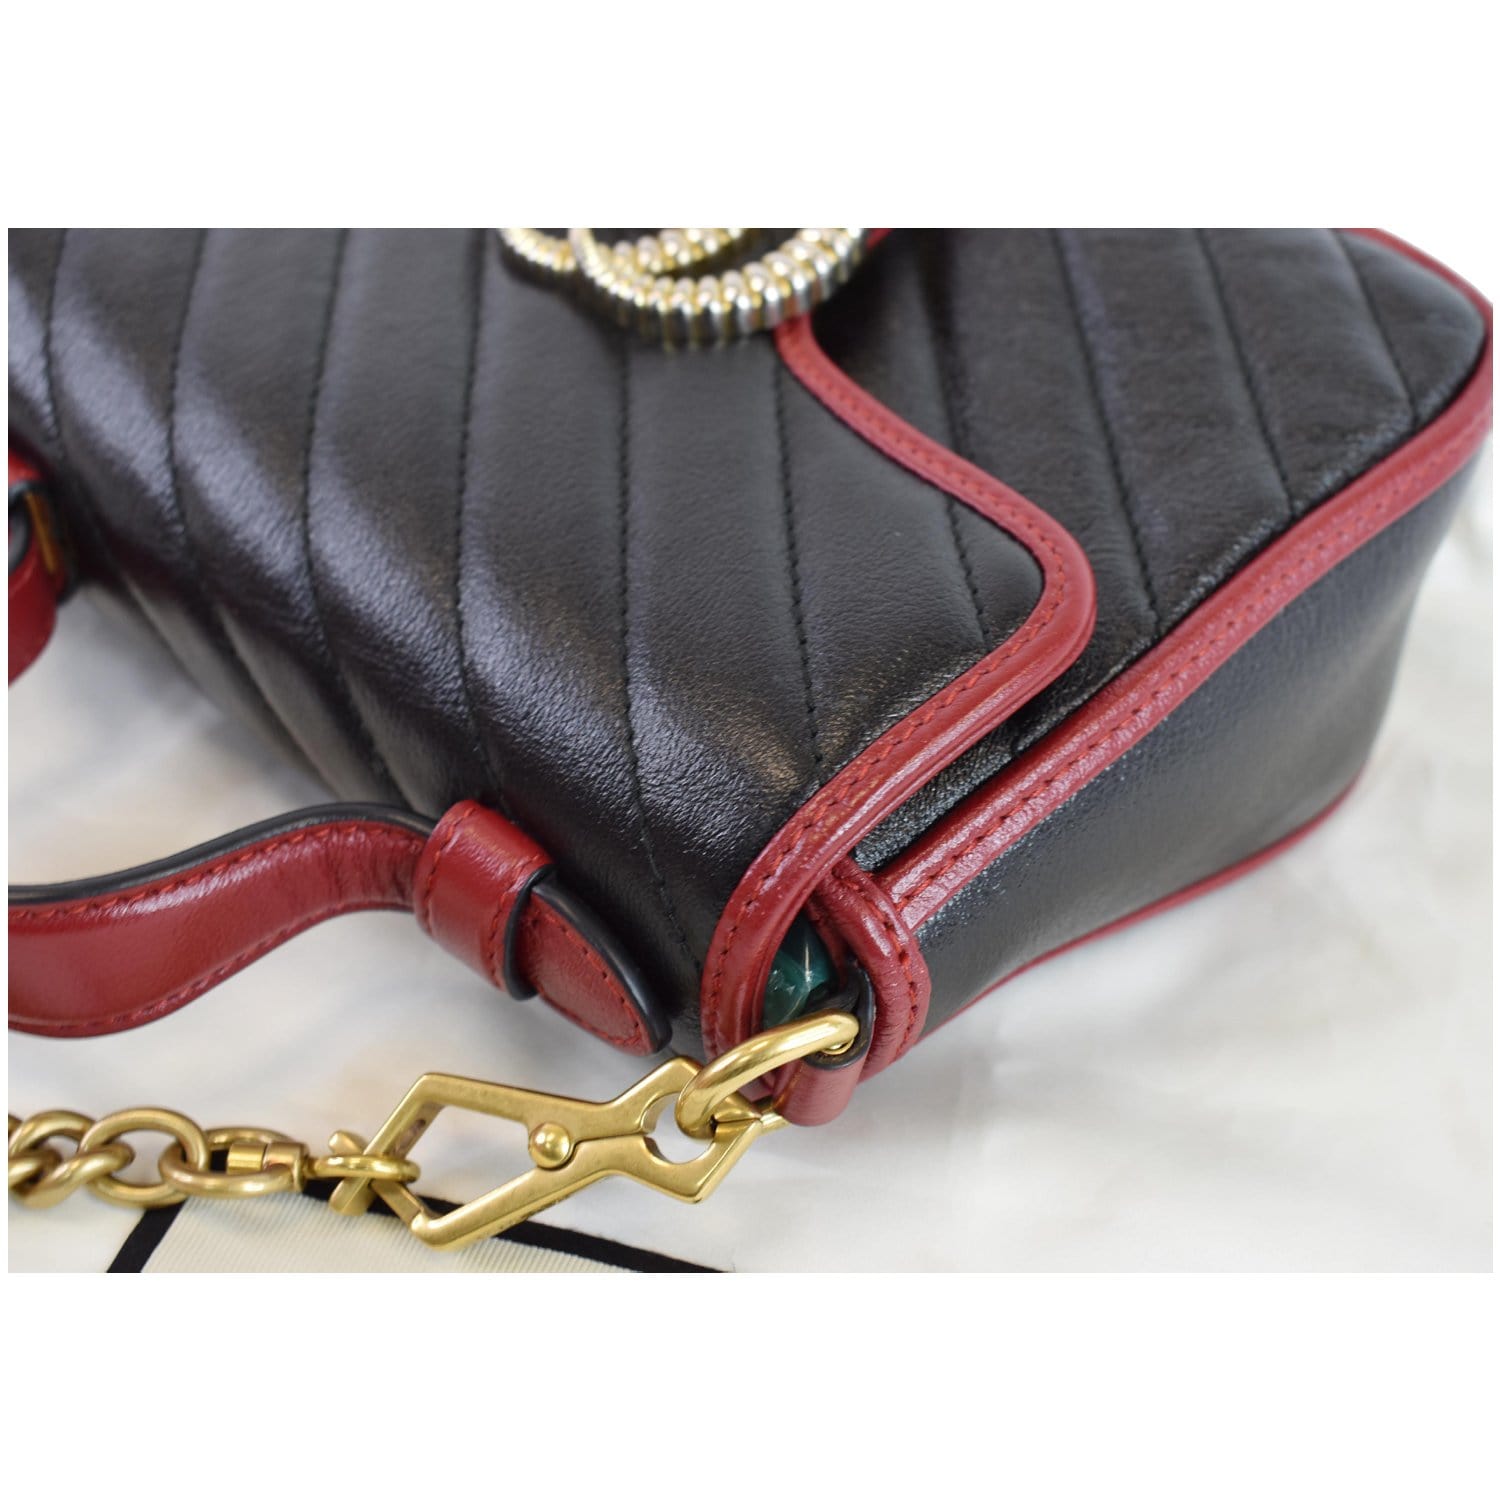 GUCCI GG Marmont Mini Top Handle Bag in Black